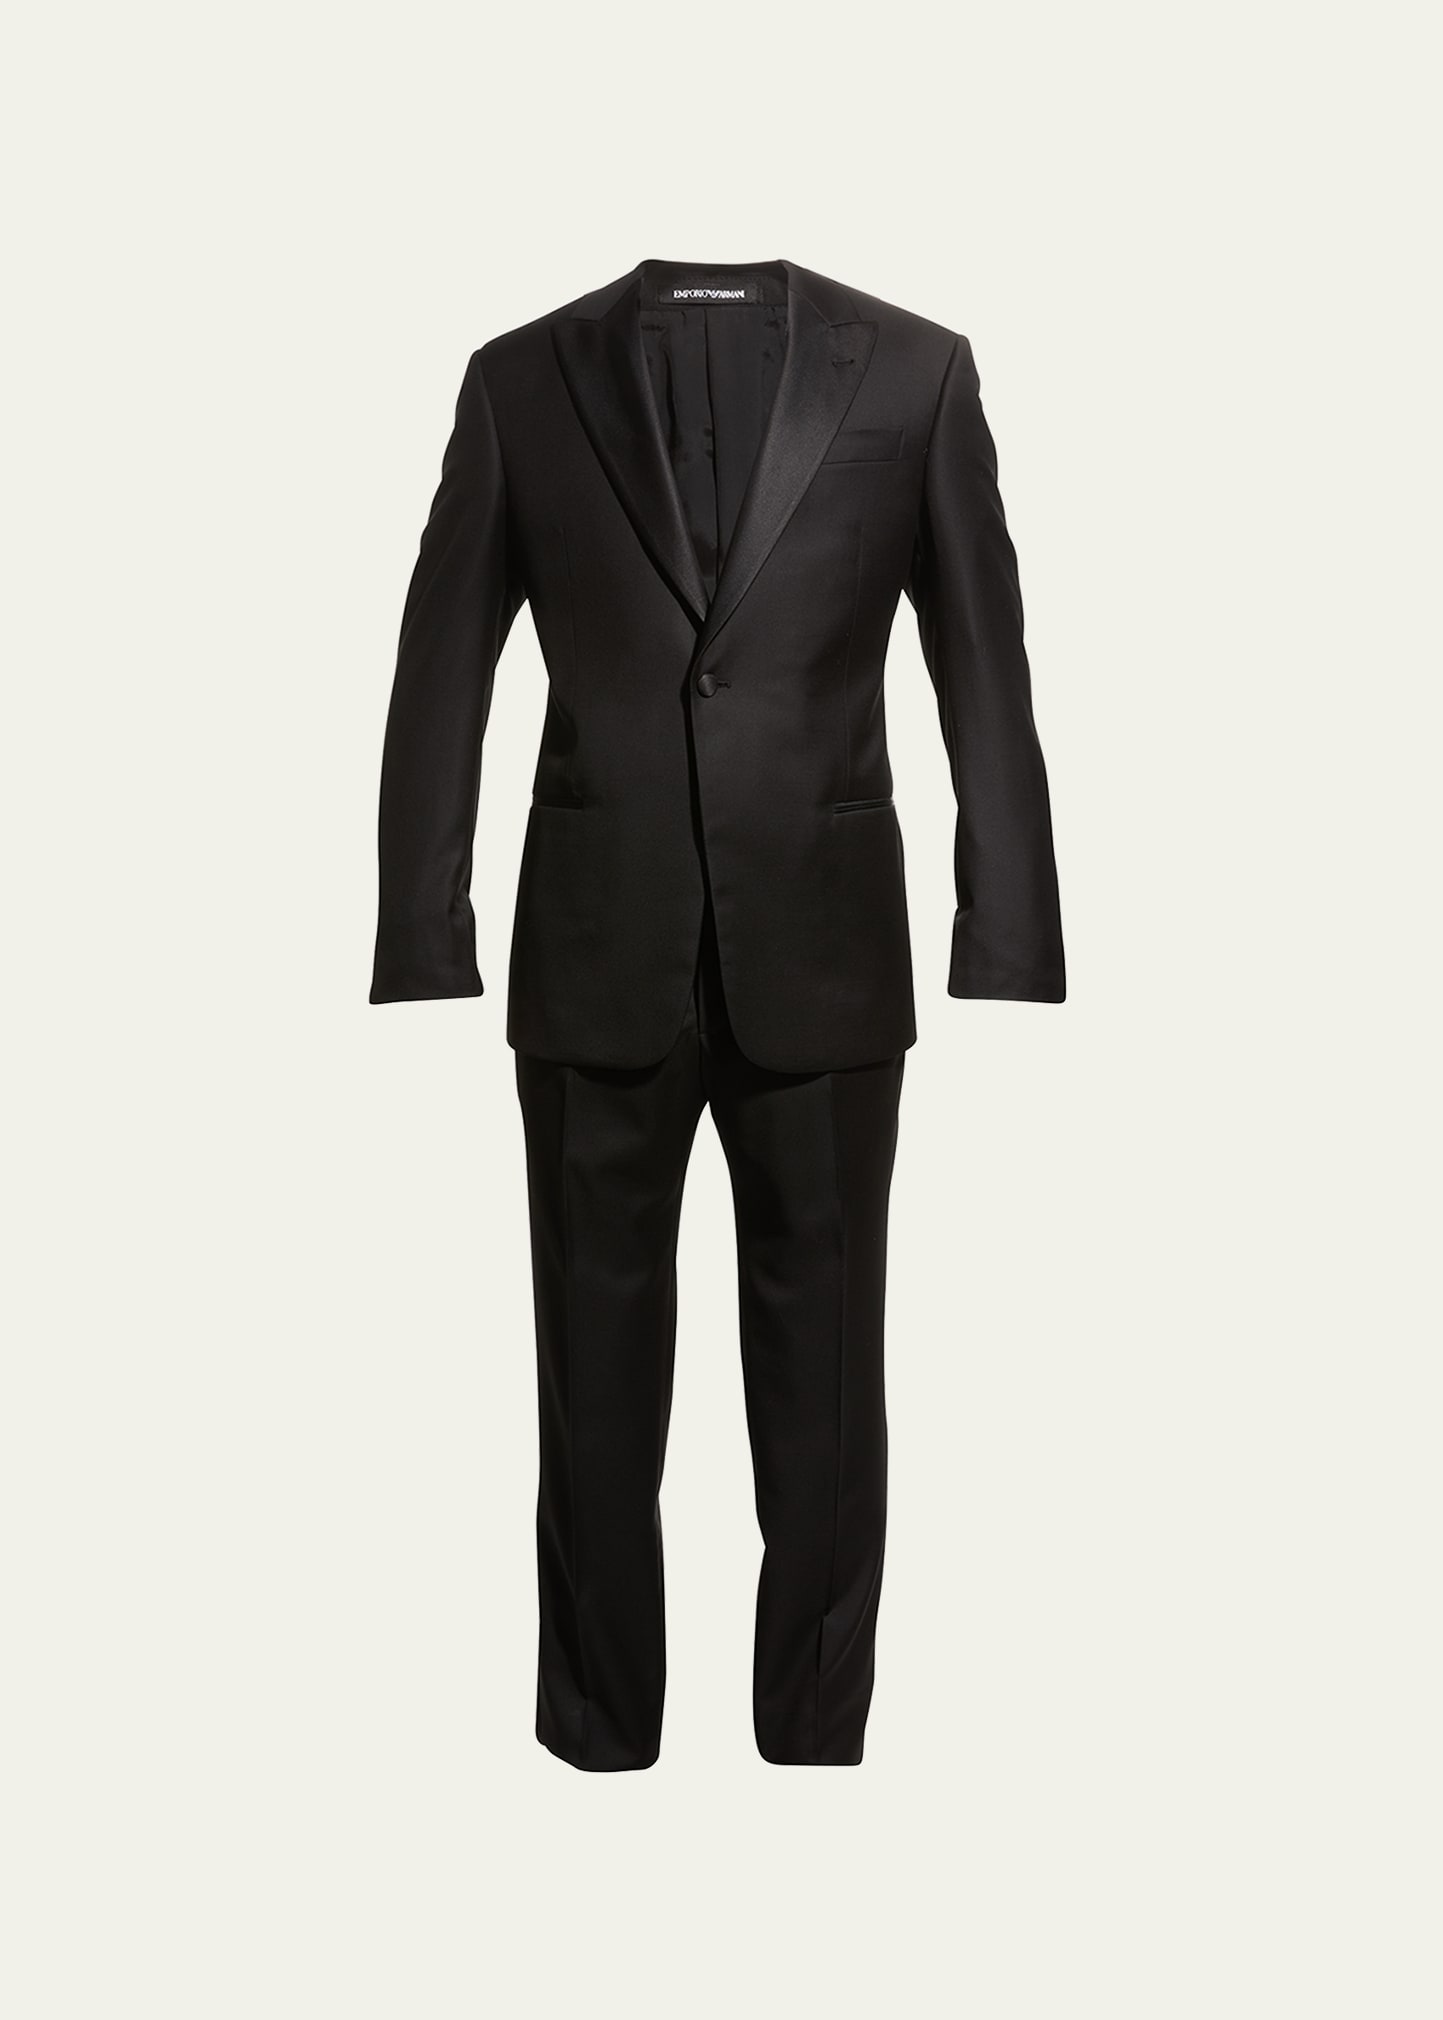 Mens Designer Suits by Mens Designer Suits - Issuu